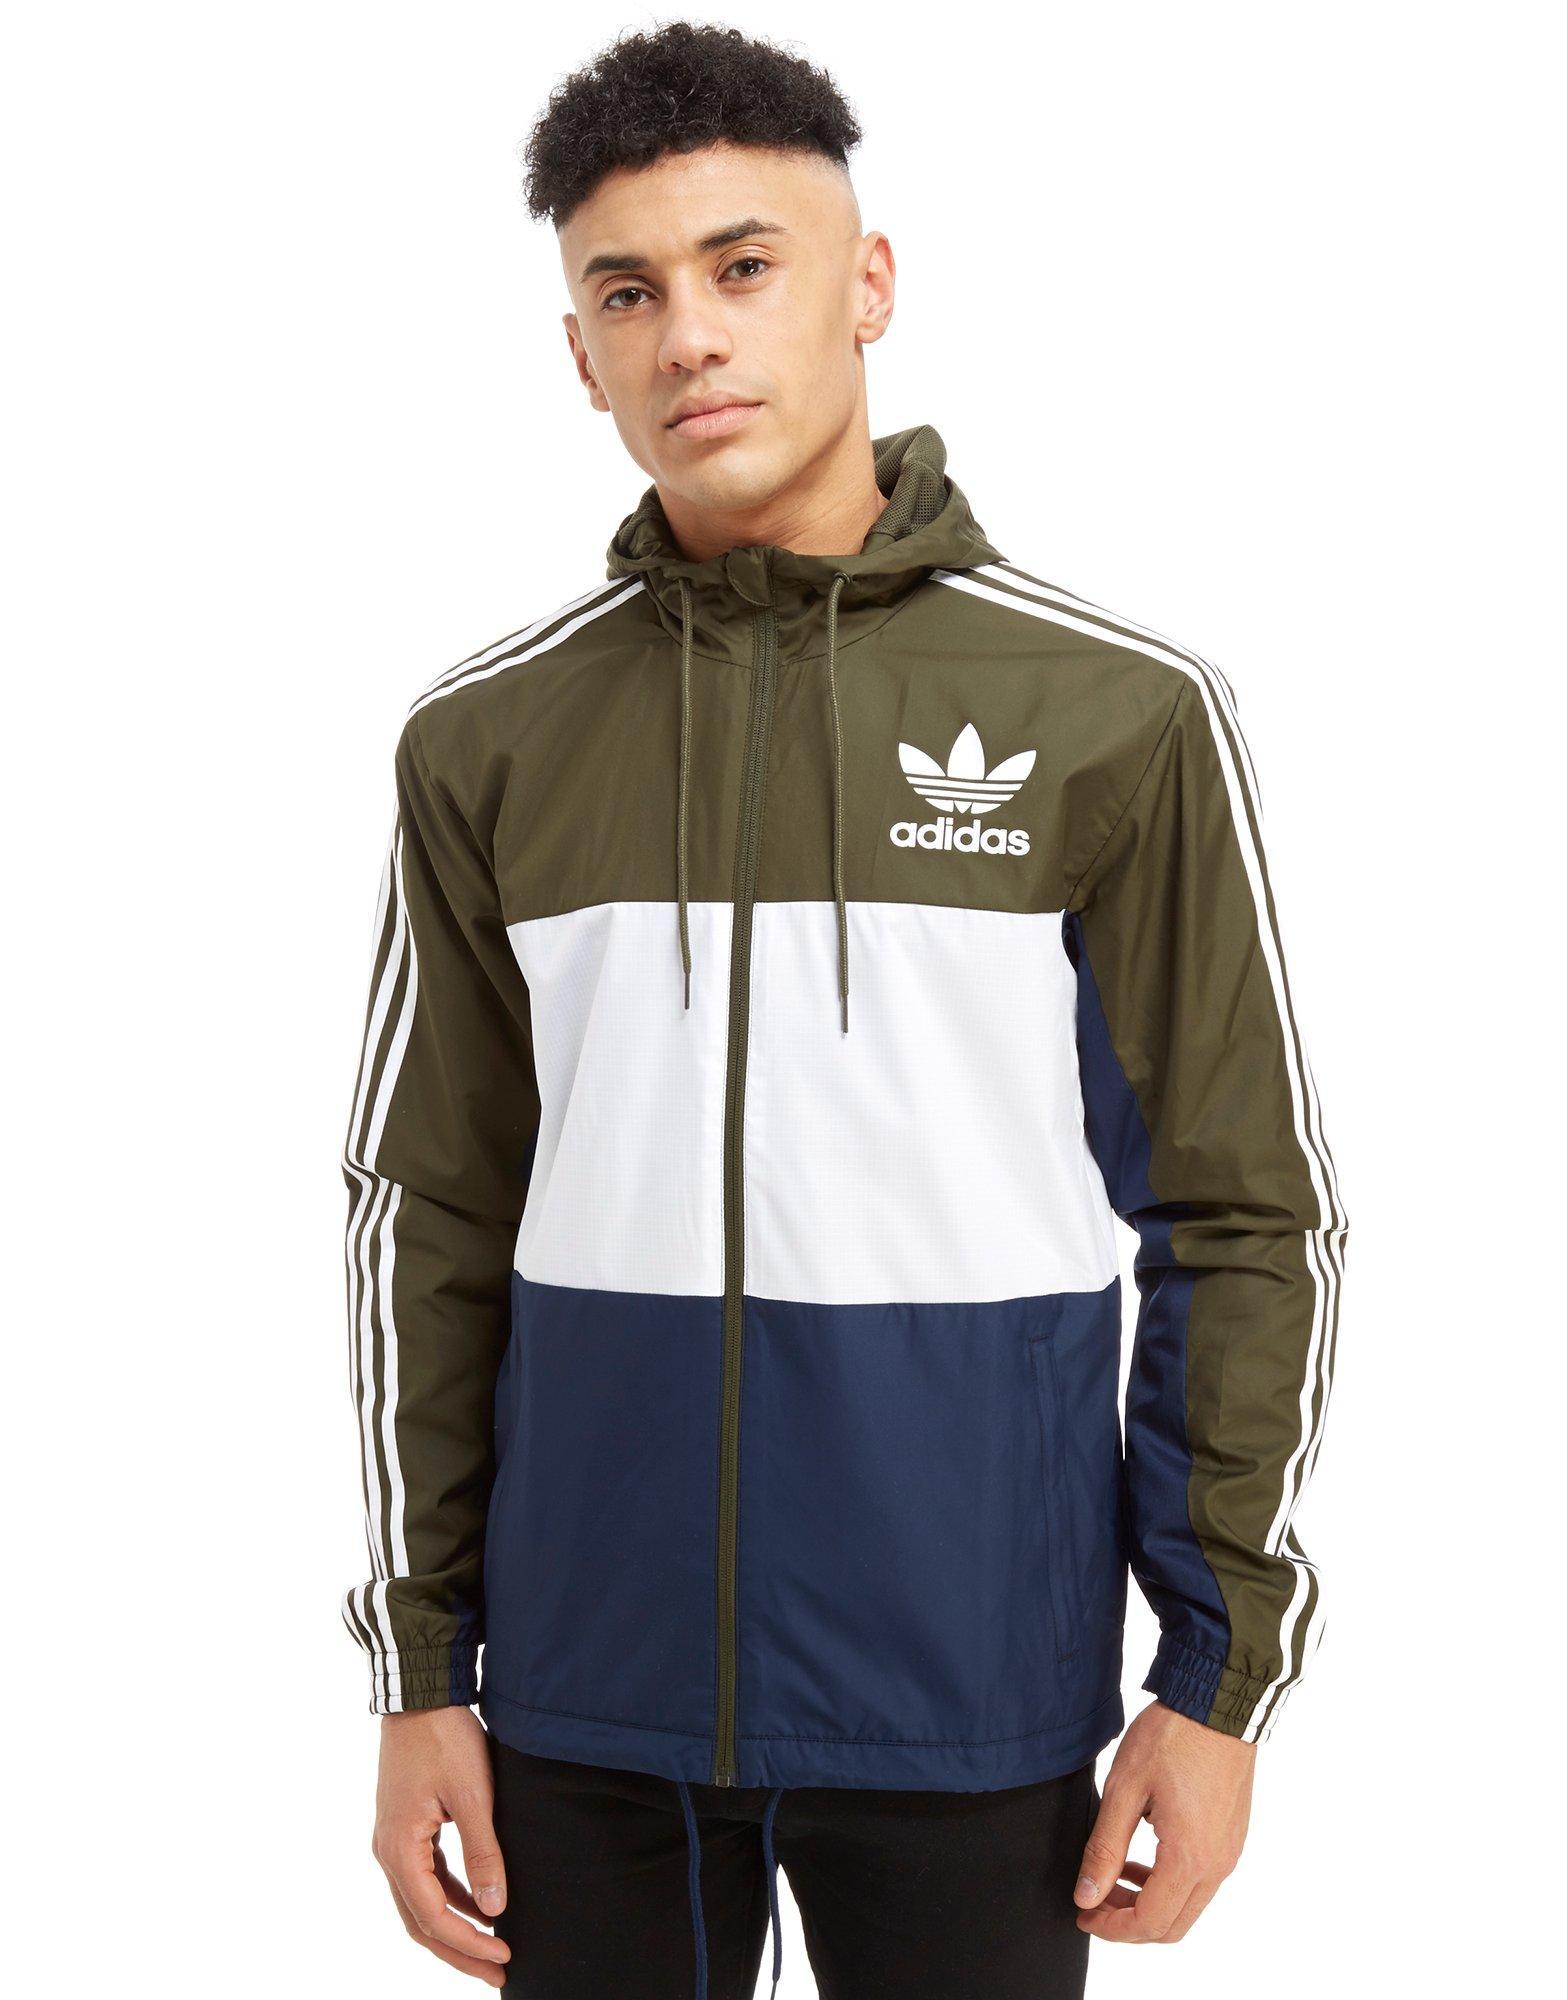 Adidas Originals Id96 Windbreaker Jacket for Men - Save 8% - Lyst